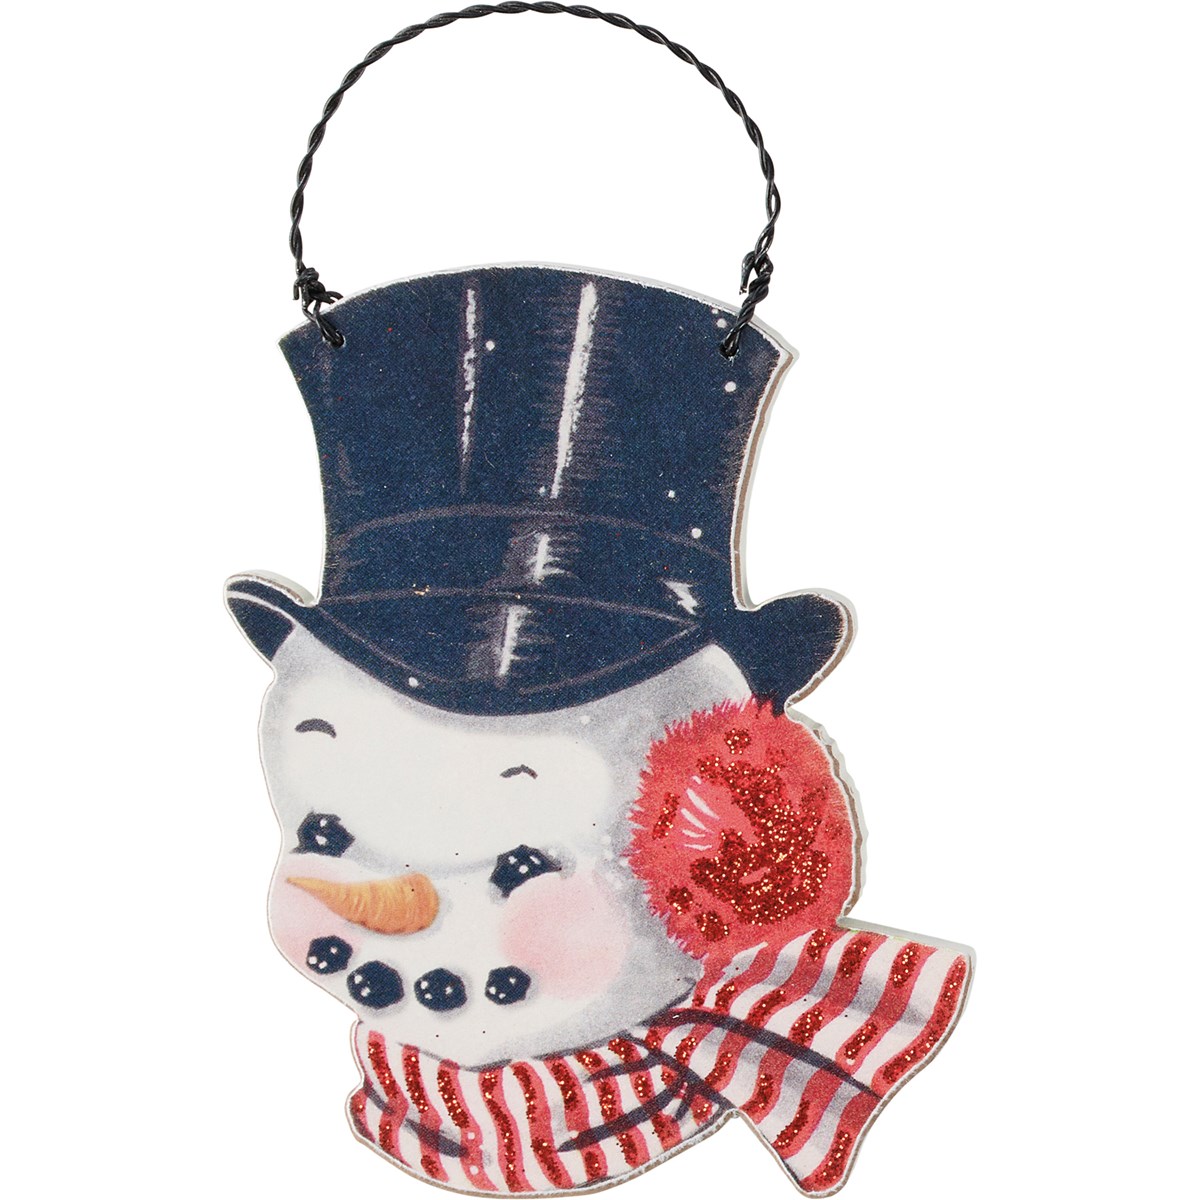 Vintage Snowmen Ornament Set - Wood, Paper, Glitter, Wire